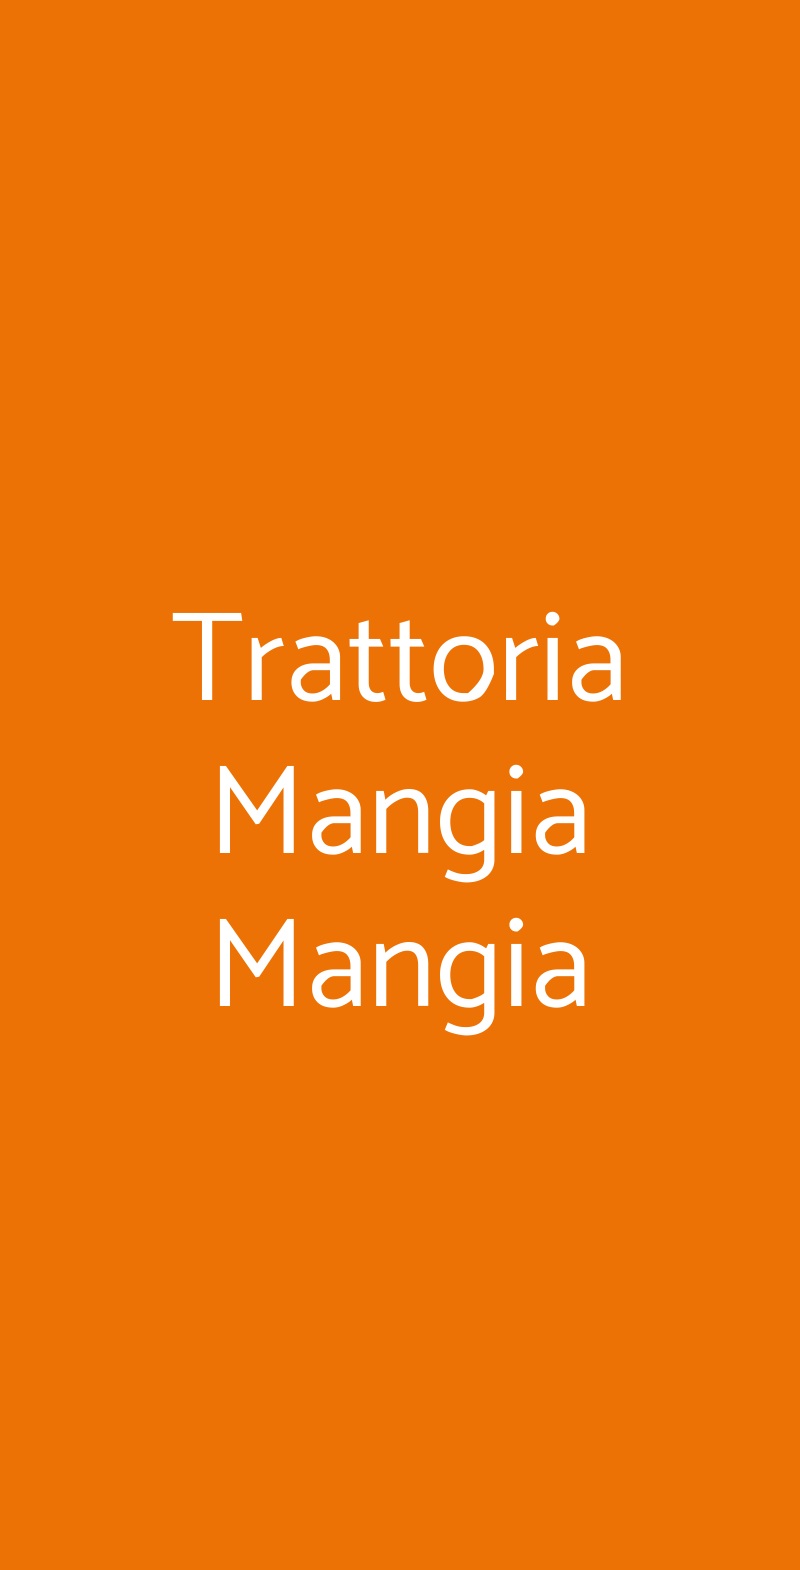 Trattoria Mangia Mangia Milano menù 1 pagina